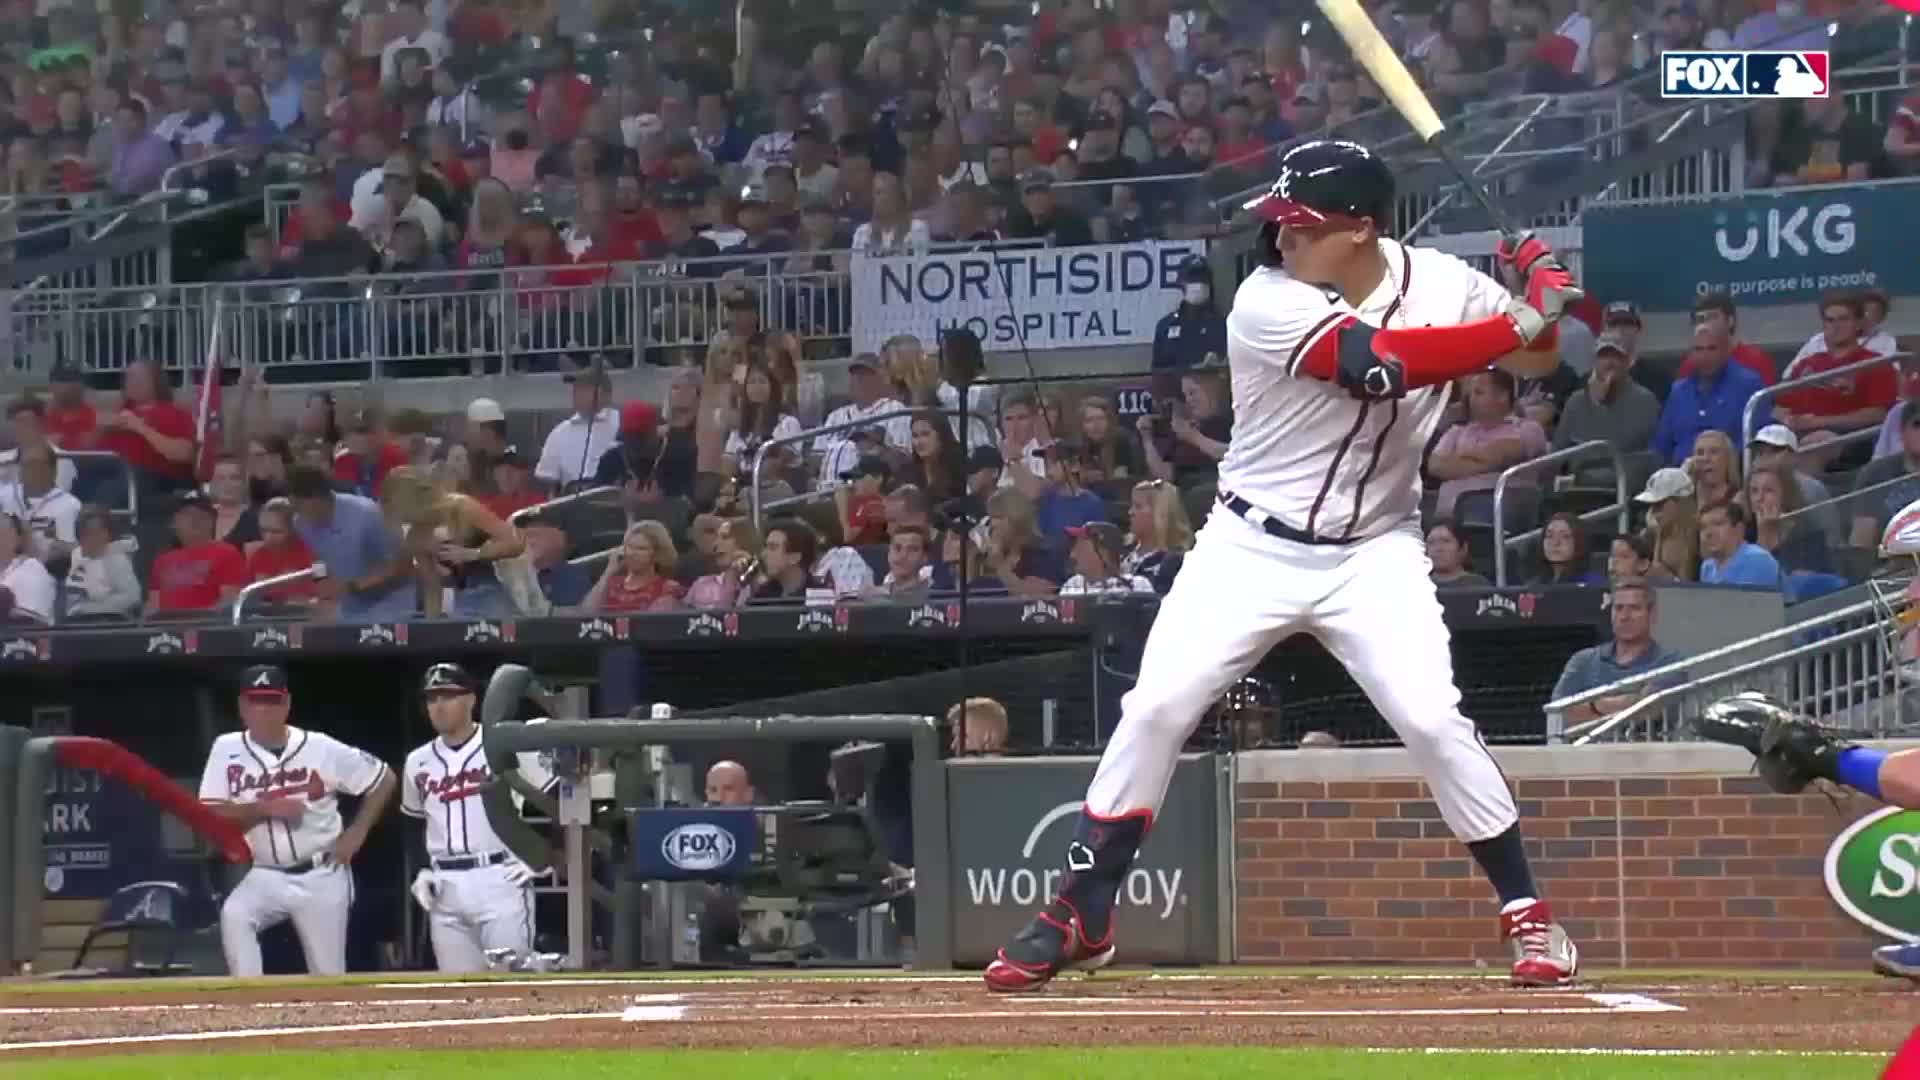 Joc Pederson breaks a cleat during AB. : r/baseball